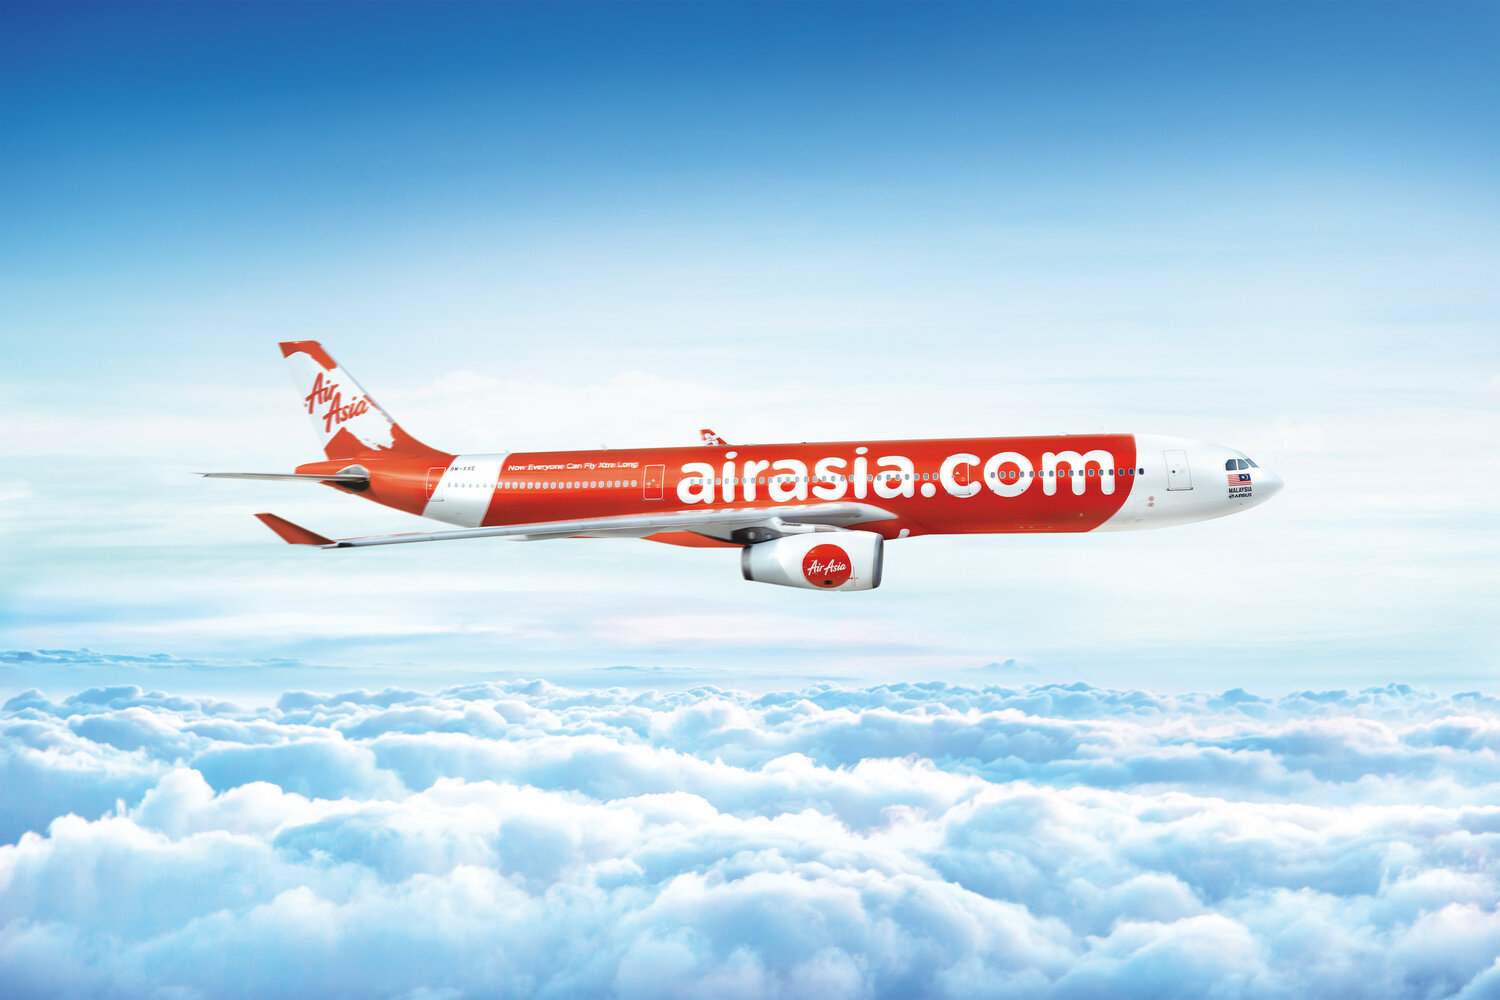 AirAsia Baggage Pricing Increased